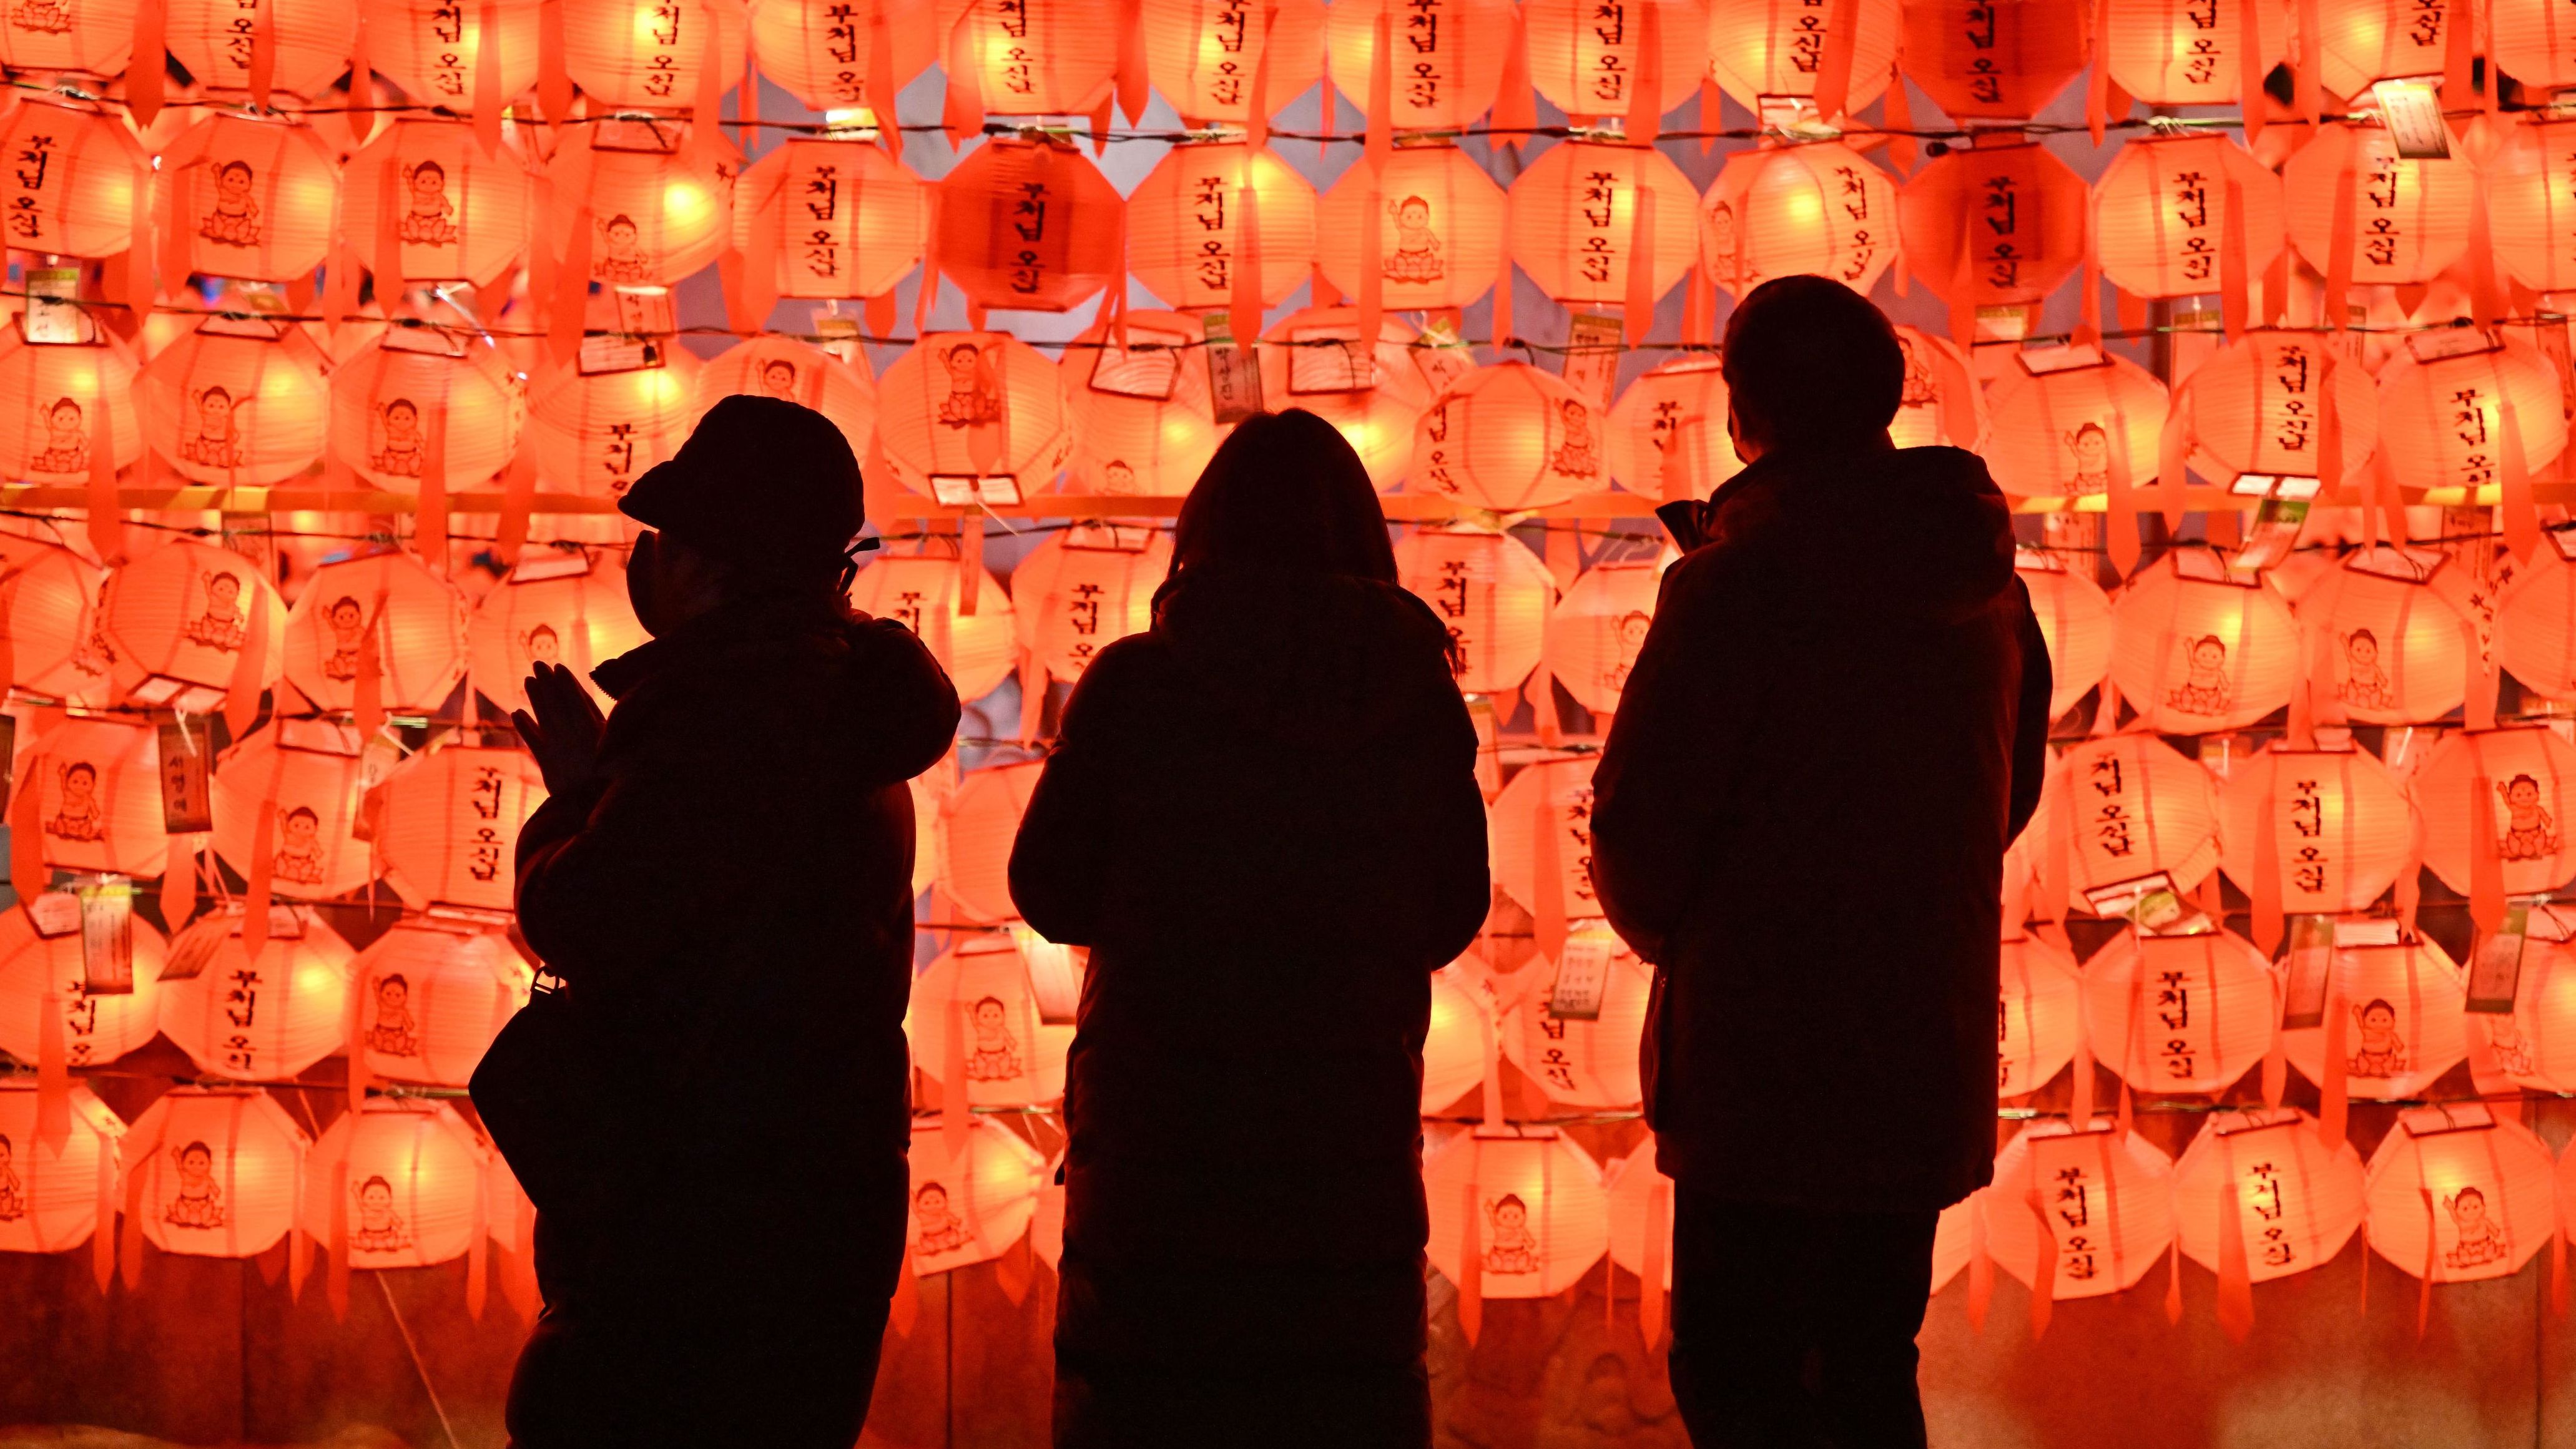 People pray in front of lotus lanterns during celebrations in Seoul, South Korea.